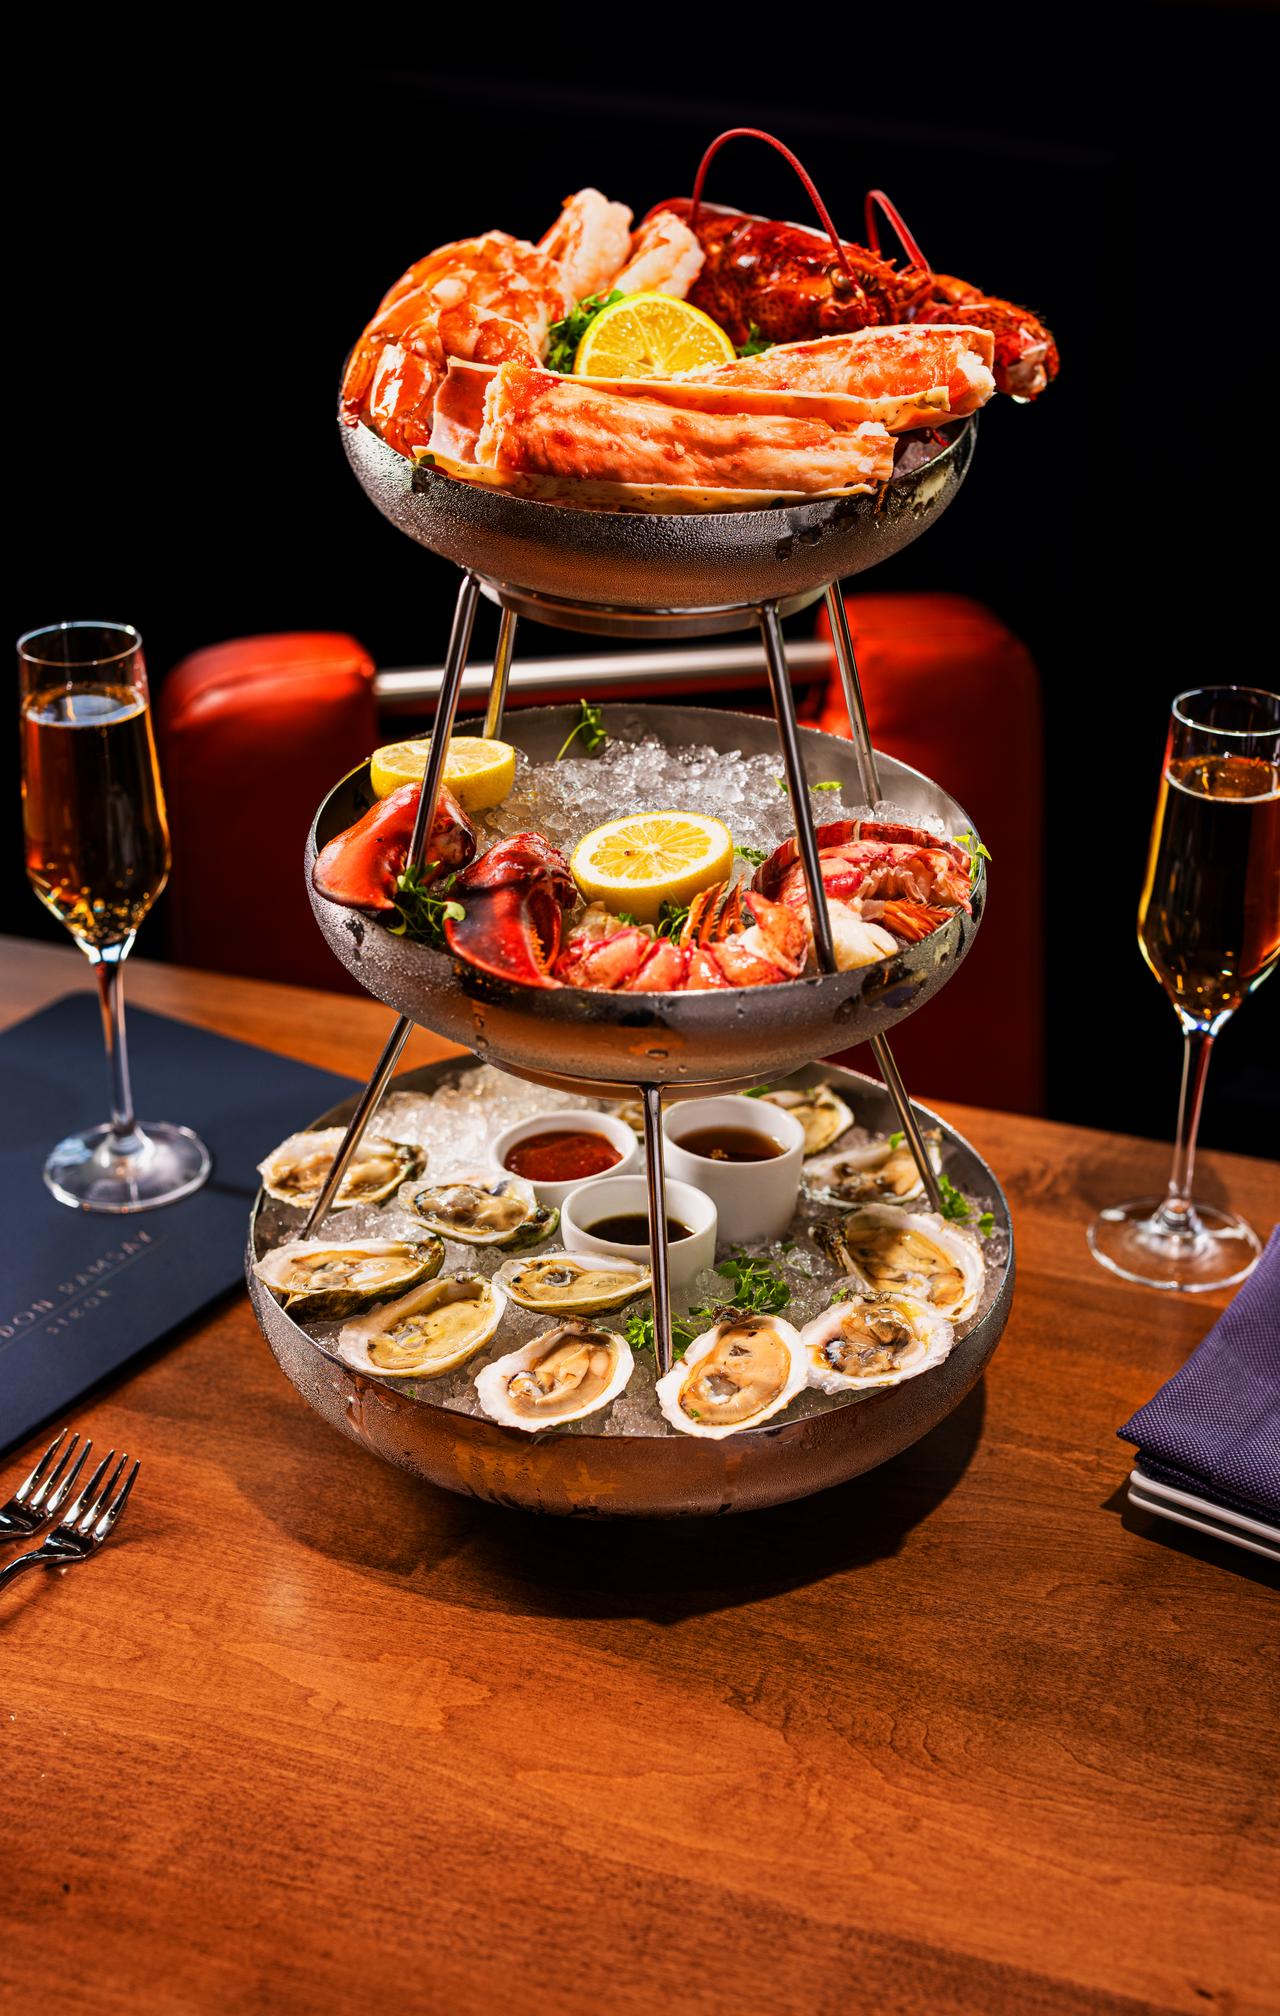 Gordon Ramsay's Shellfish Platter - 1/2 lb. King Crab, Oysters, Shrimp Cocktail, Lobster, Citrus Soy, Champagne Mignonette, Cocktail Sauce